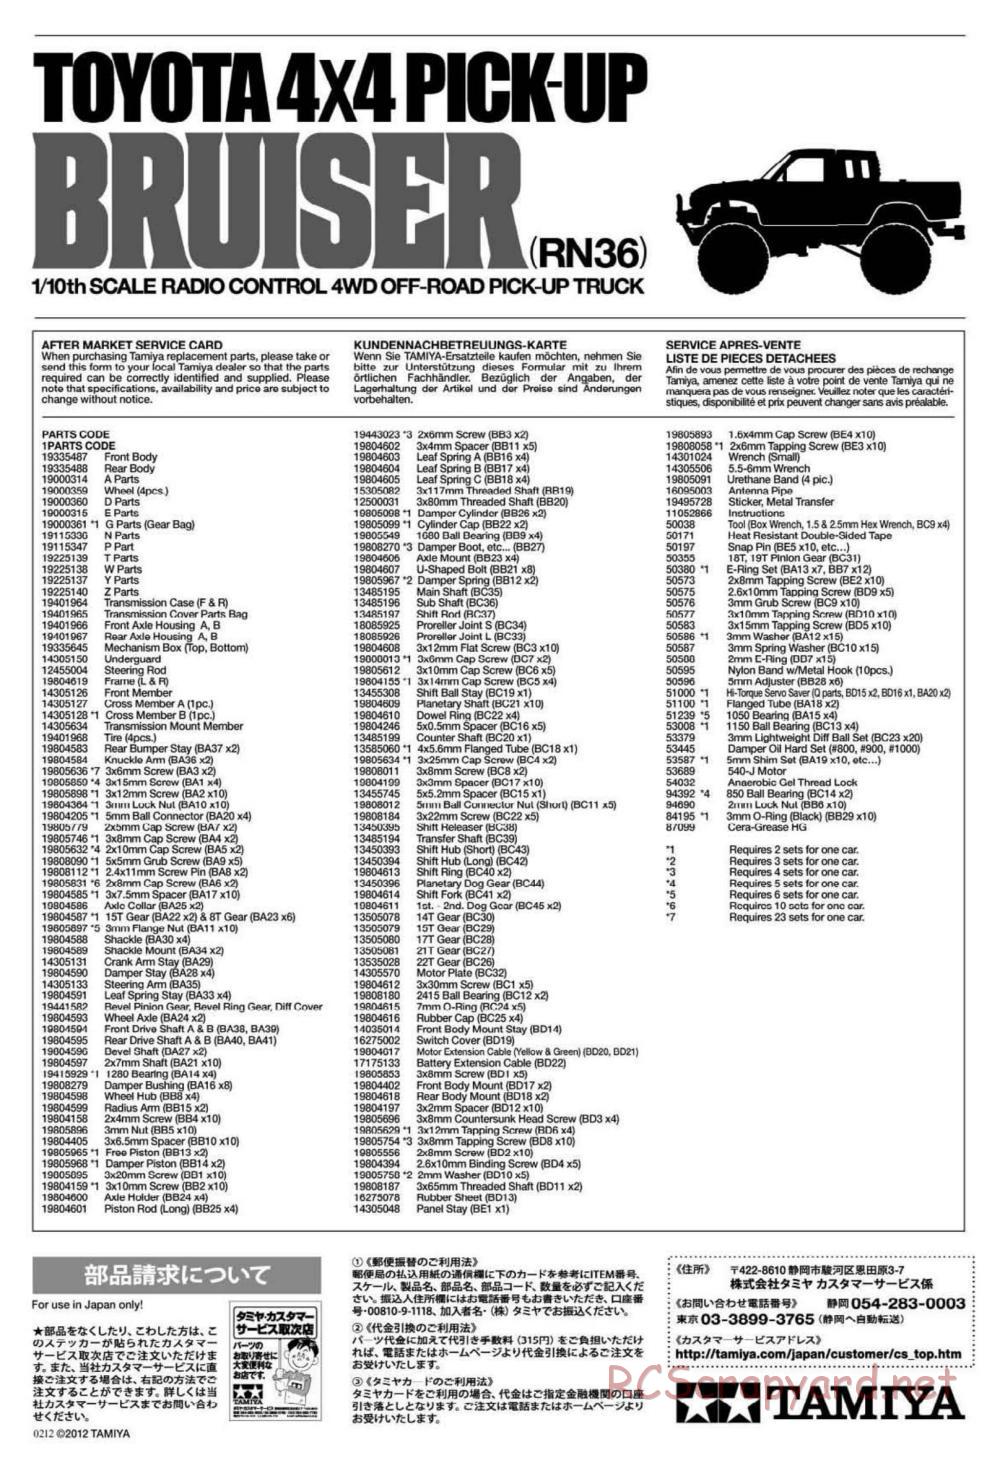 Tamiya - Toyota 4x4 Pick Up Bruiser Chassis - Manual - Page 38